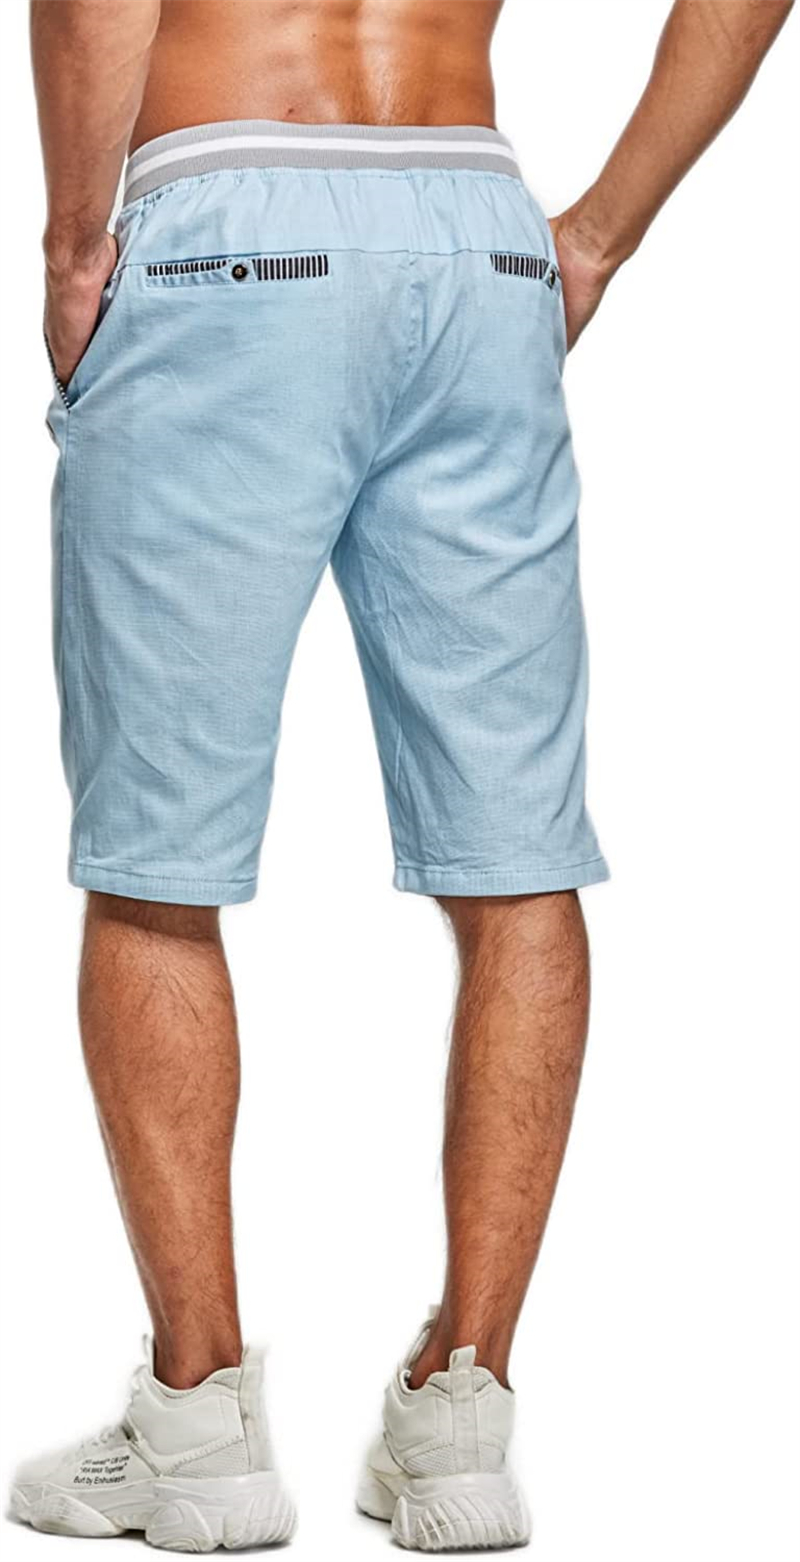 Cotton Men's Shorts Summer Casual Classic Drawstring Summer Beach Shorts with Elastic Waist And Pockets M-5XL